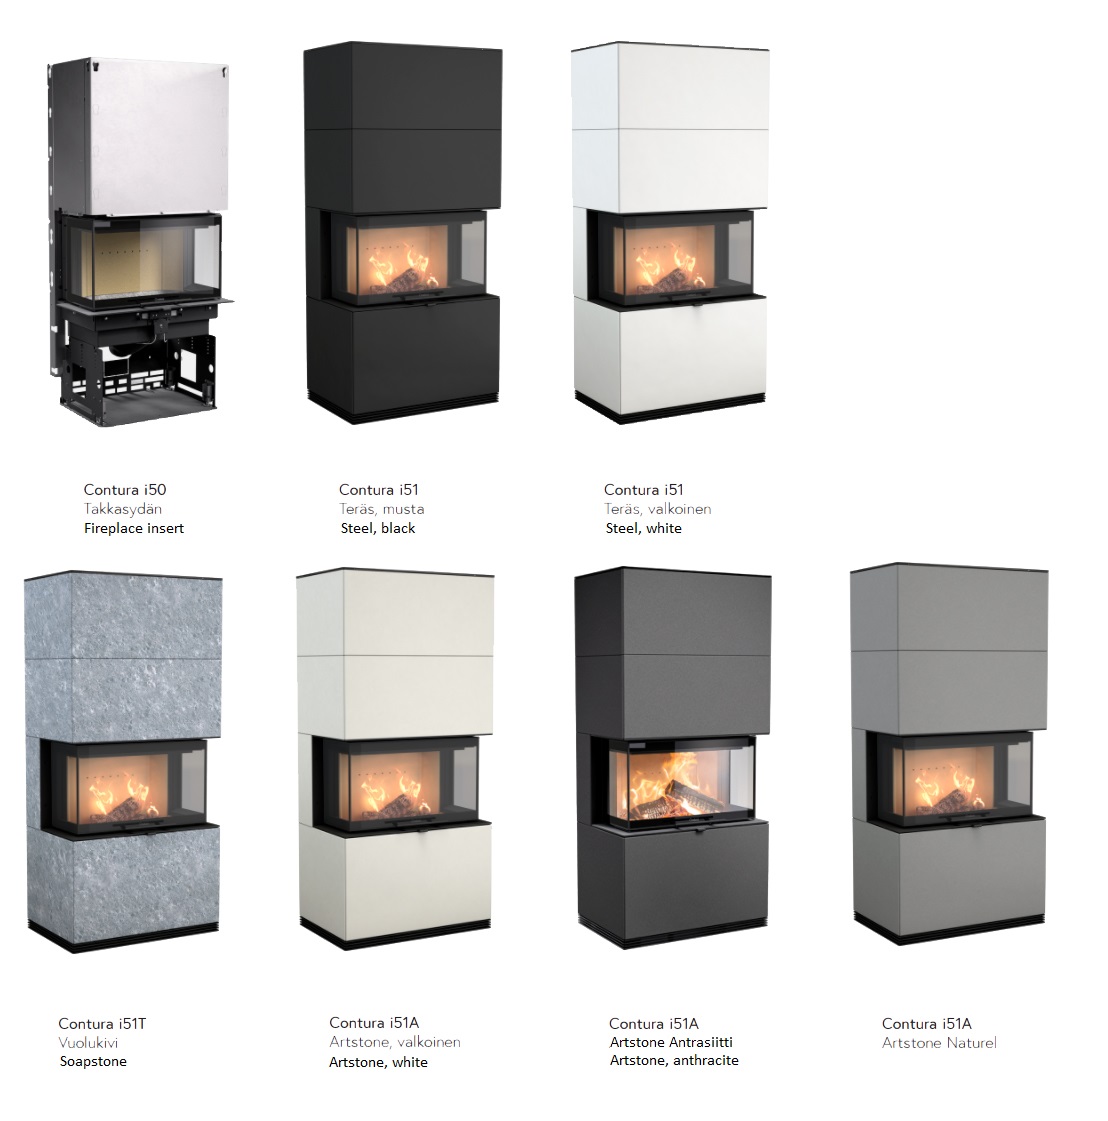 Contura i50 -takkasydän- ja i51 -takkamallit | Contura i40 fireplace insert and i51 fireplace models